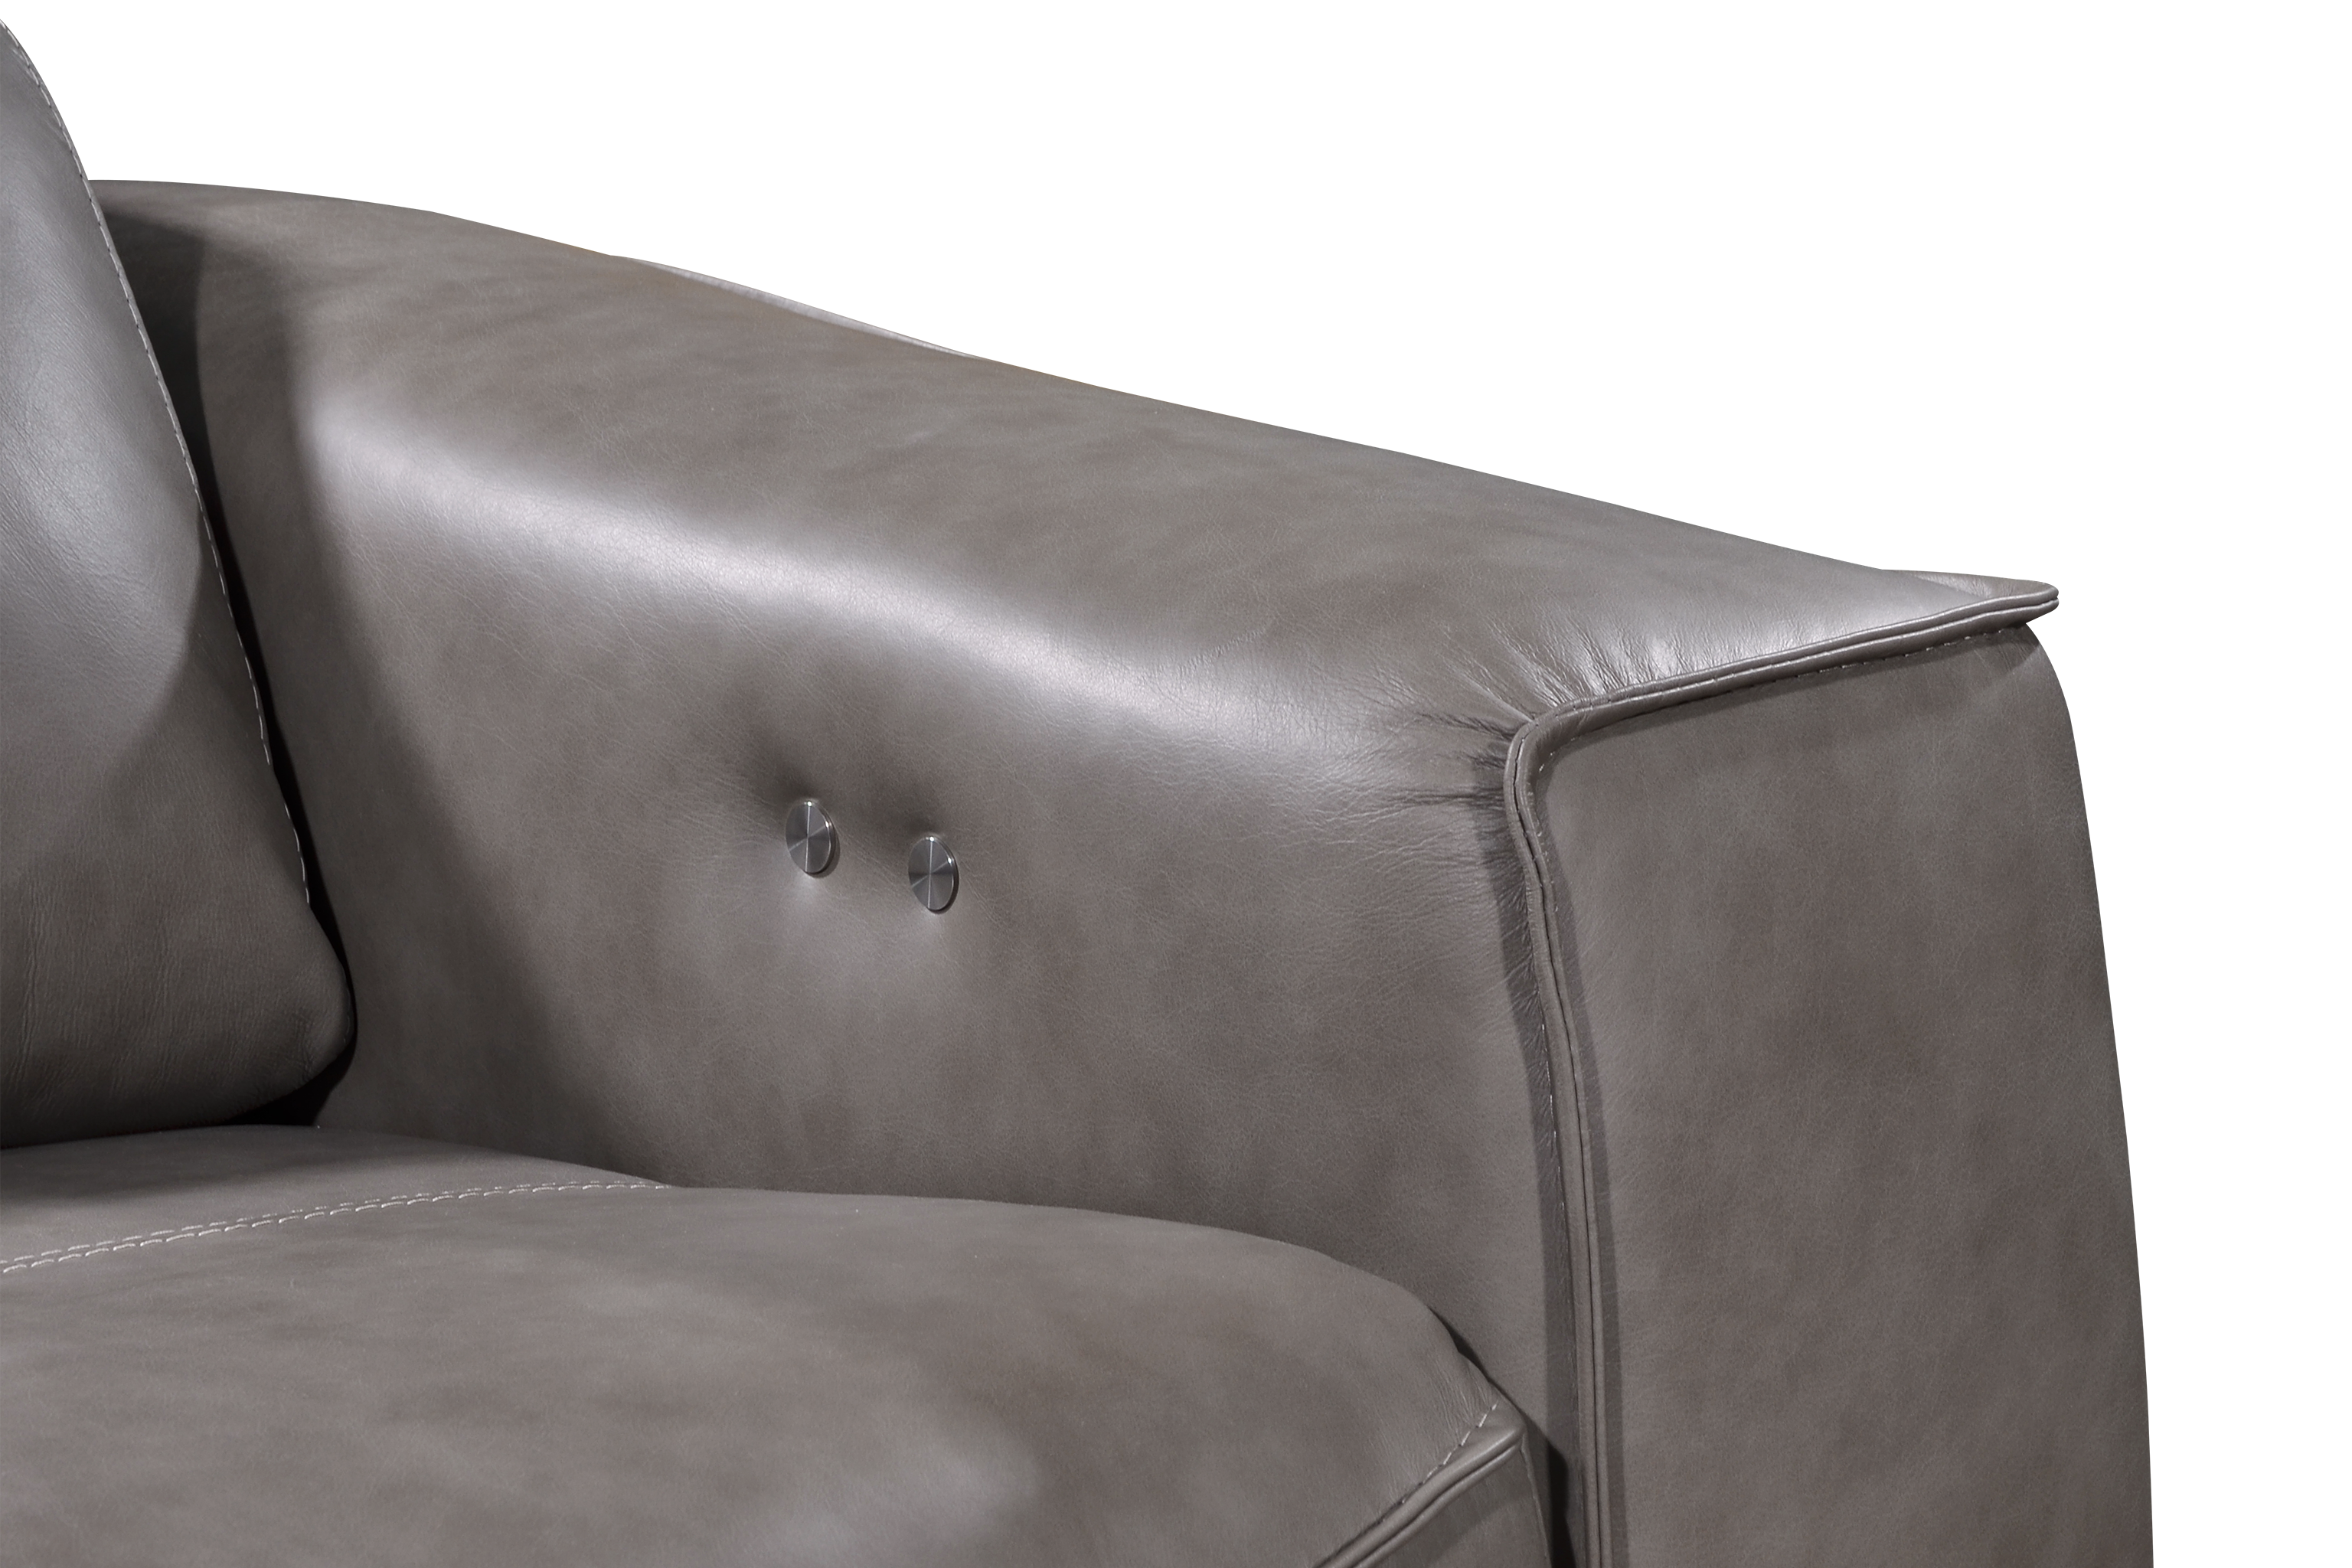 HENRIETTA 2.5 Seater Recliner Sofa in Leather by Castilla